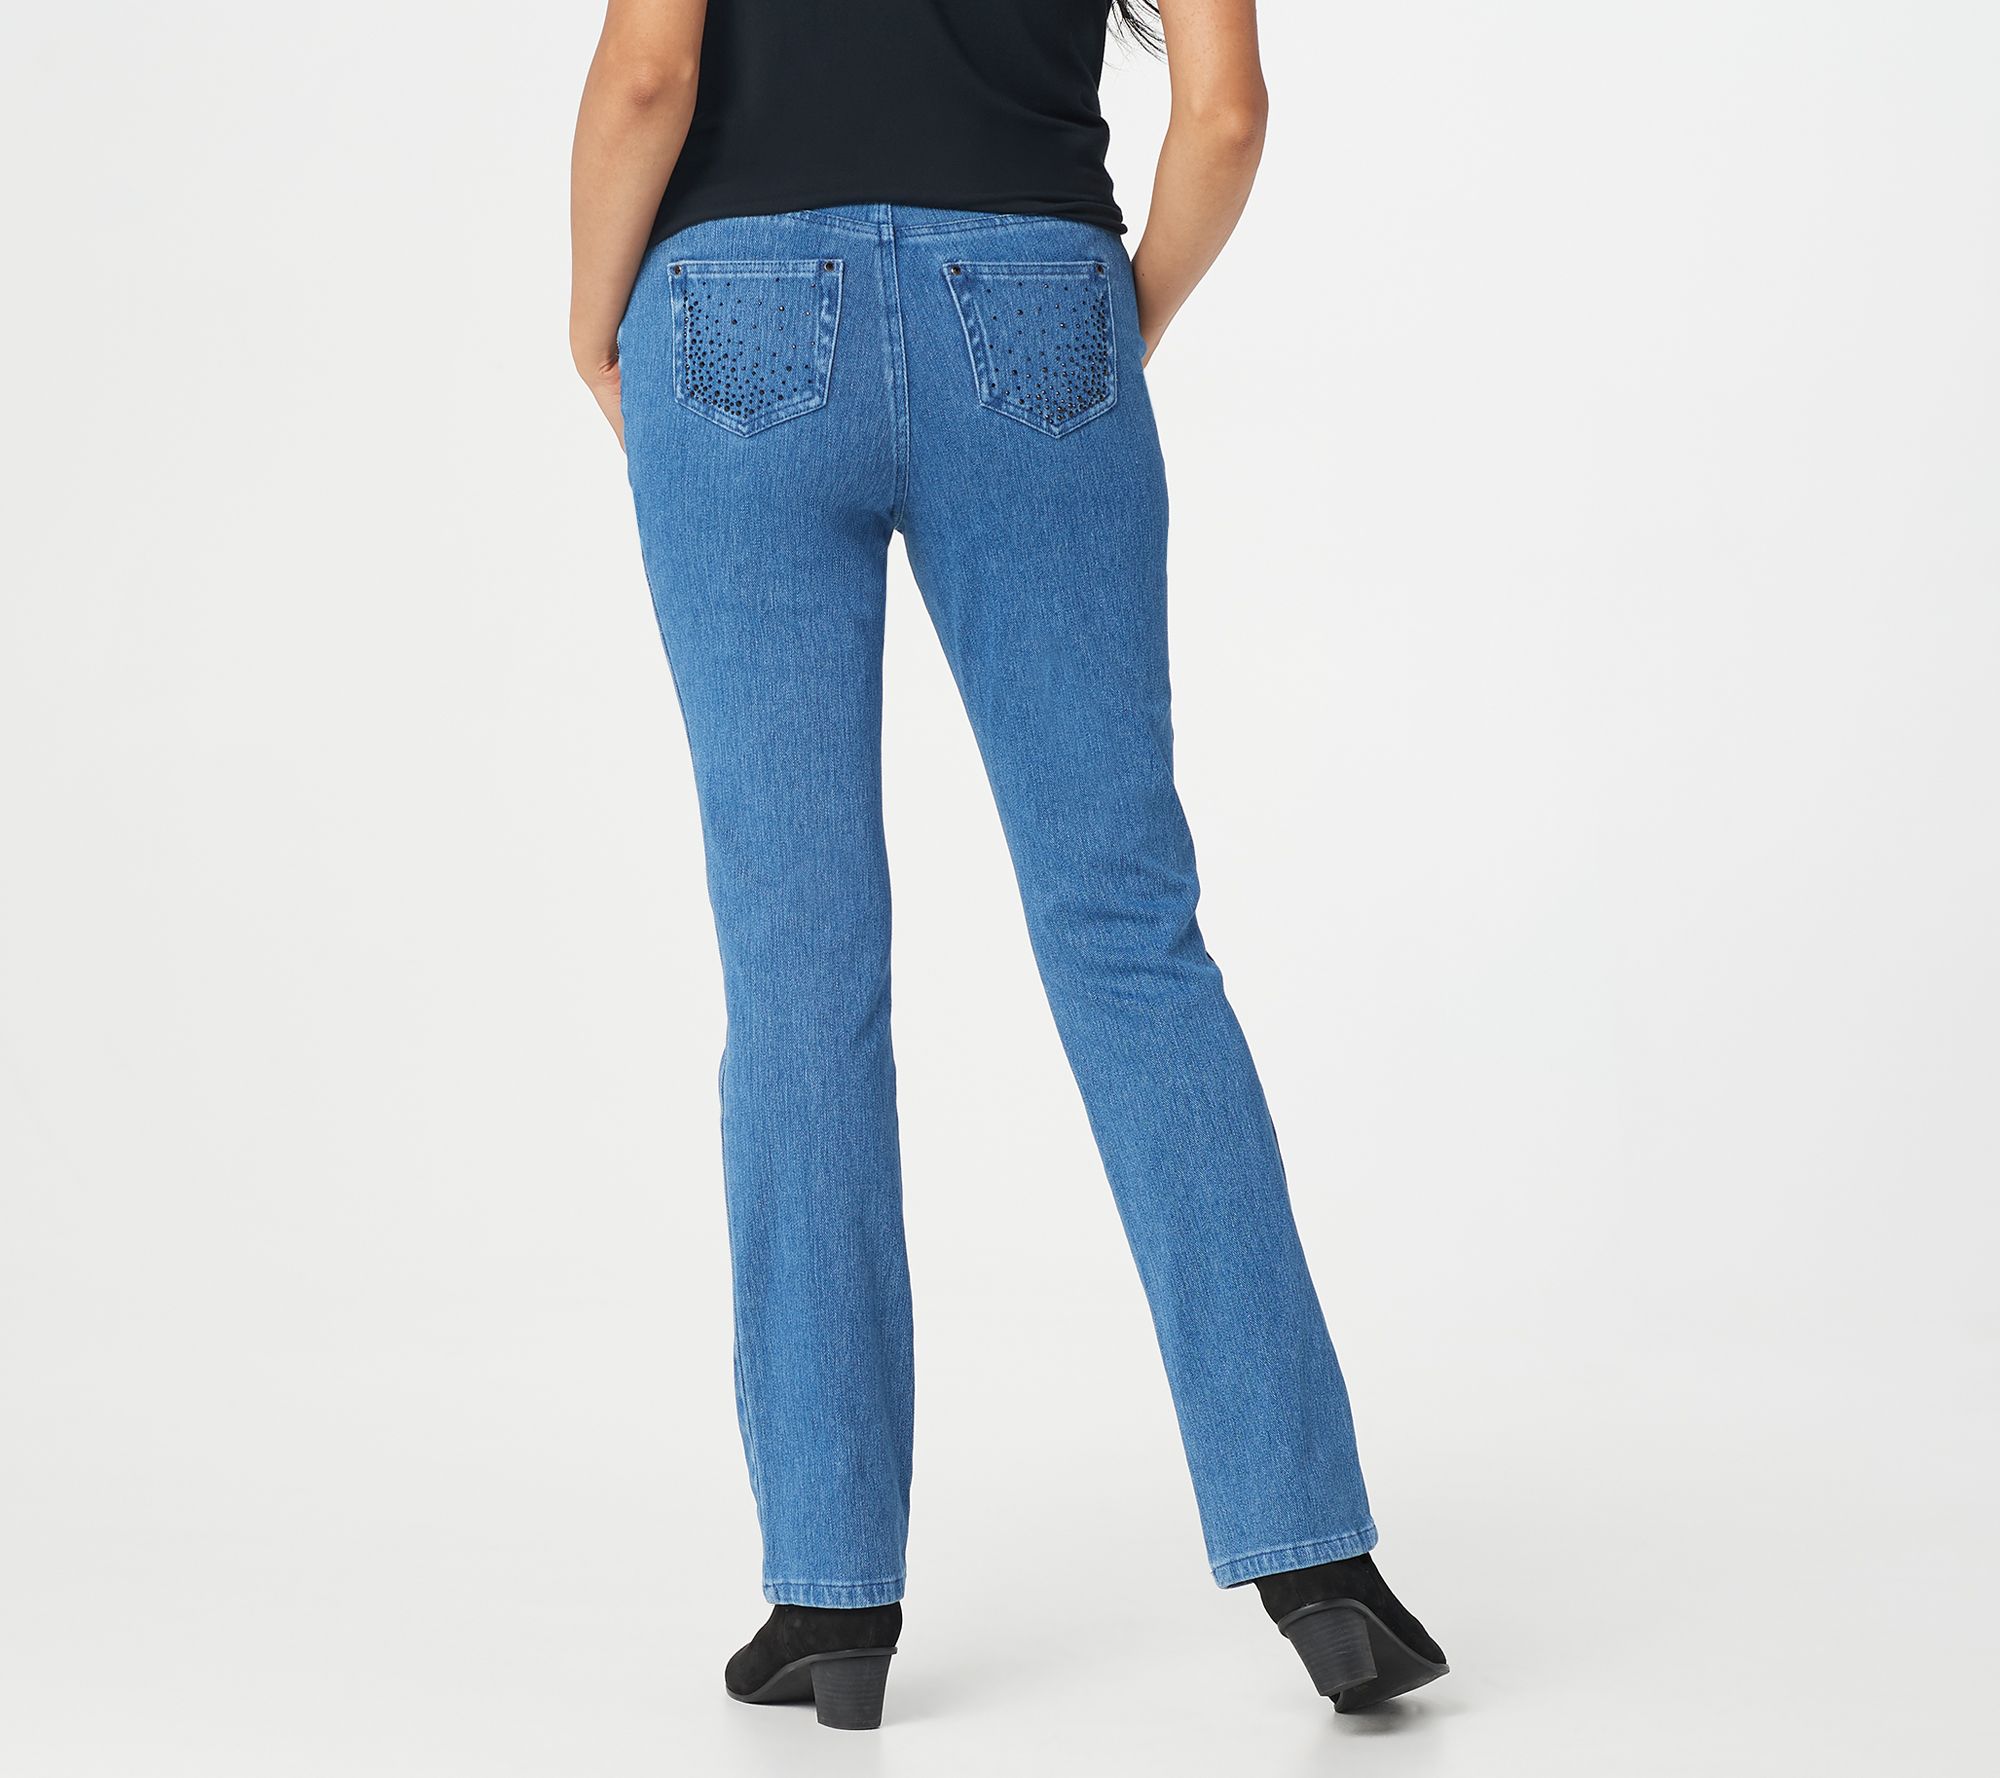 petite embellished jeans